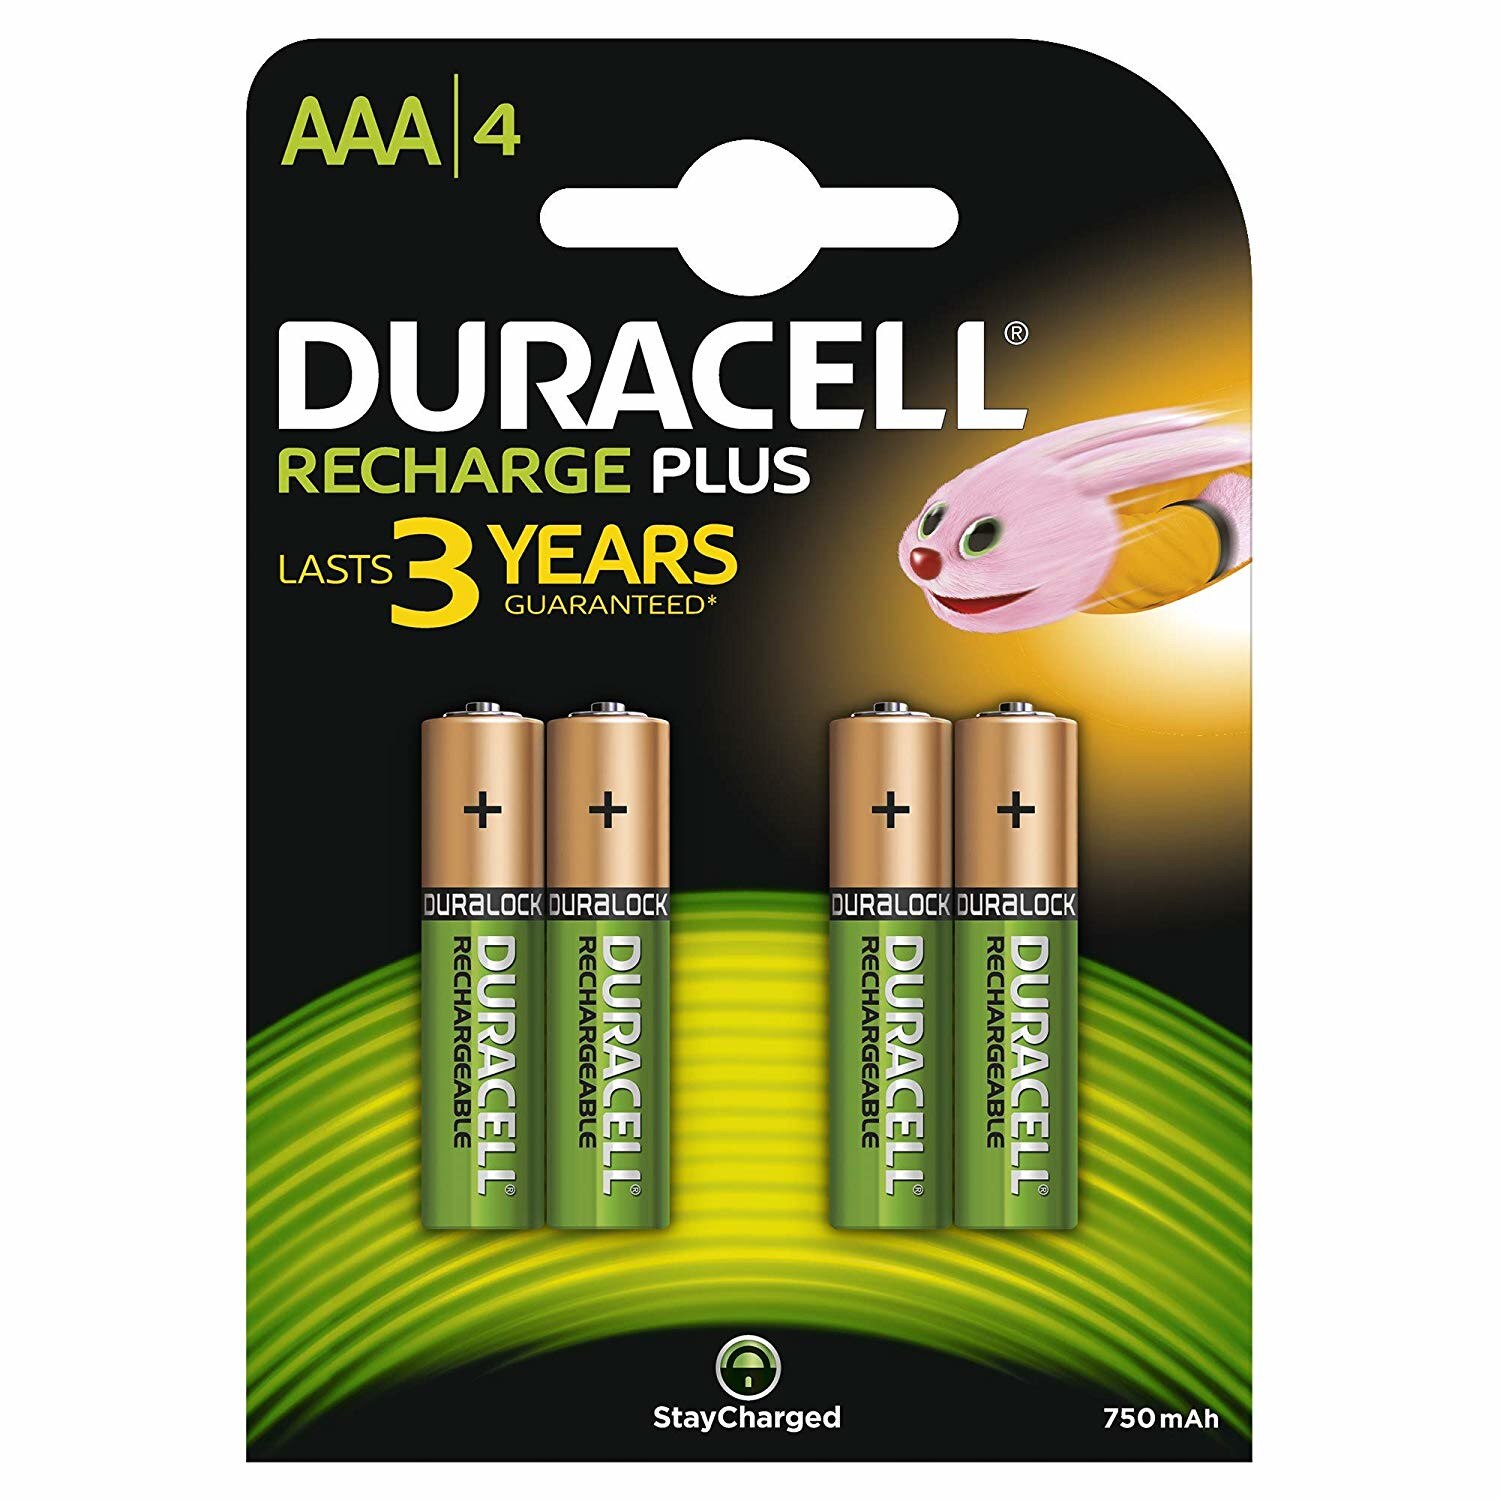 Acumulatori R3 Duracell Staycharged 1.2V 750mAh set 4 - eMAG.ro